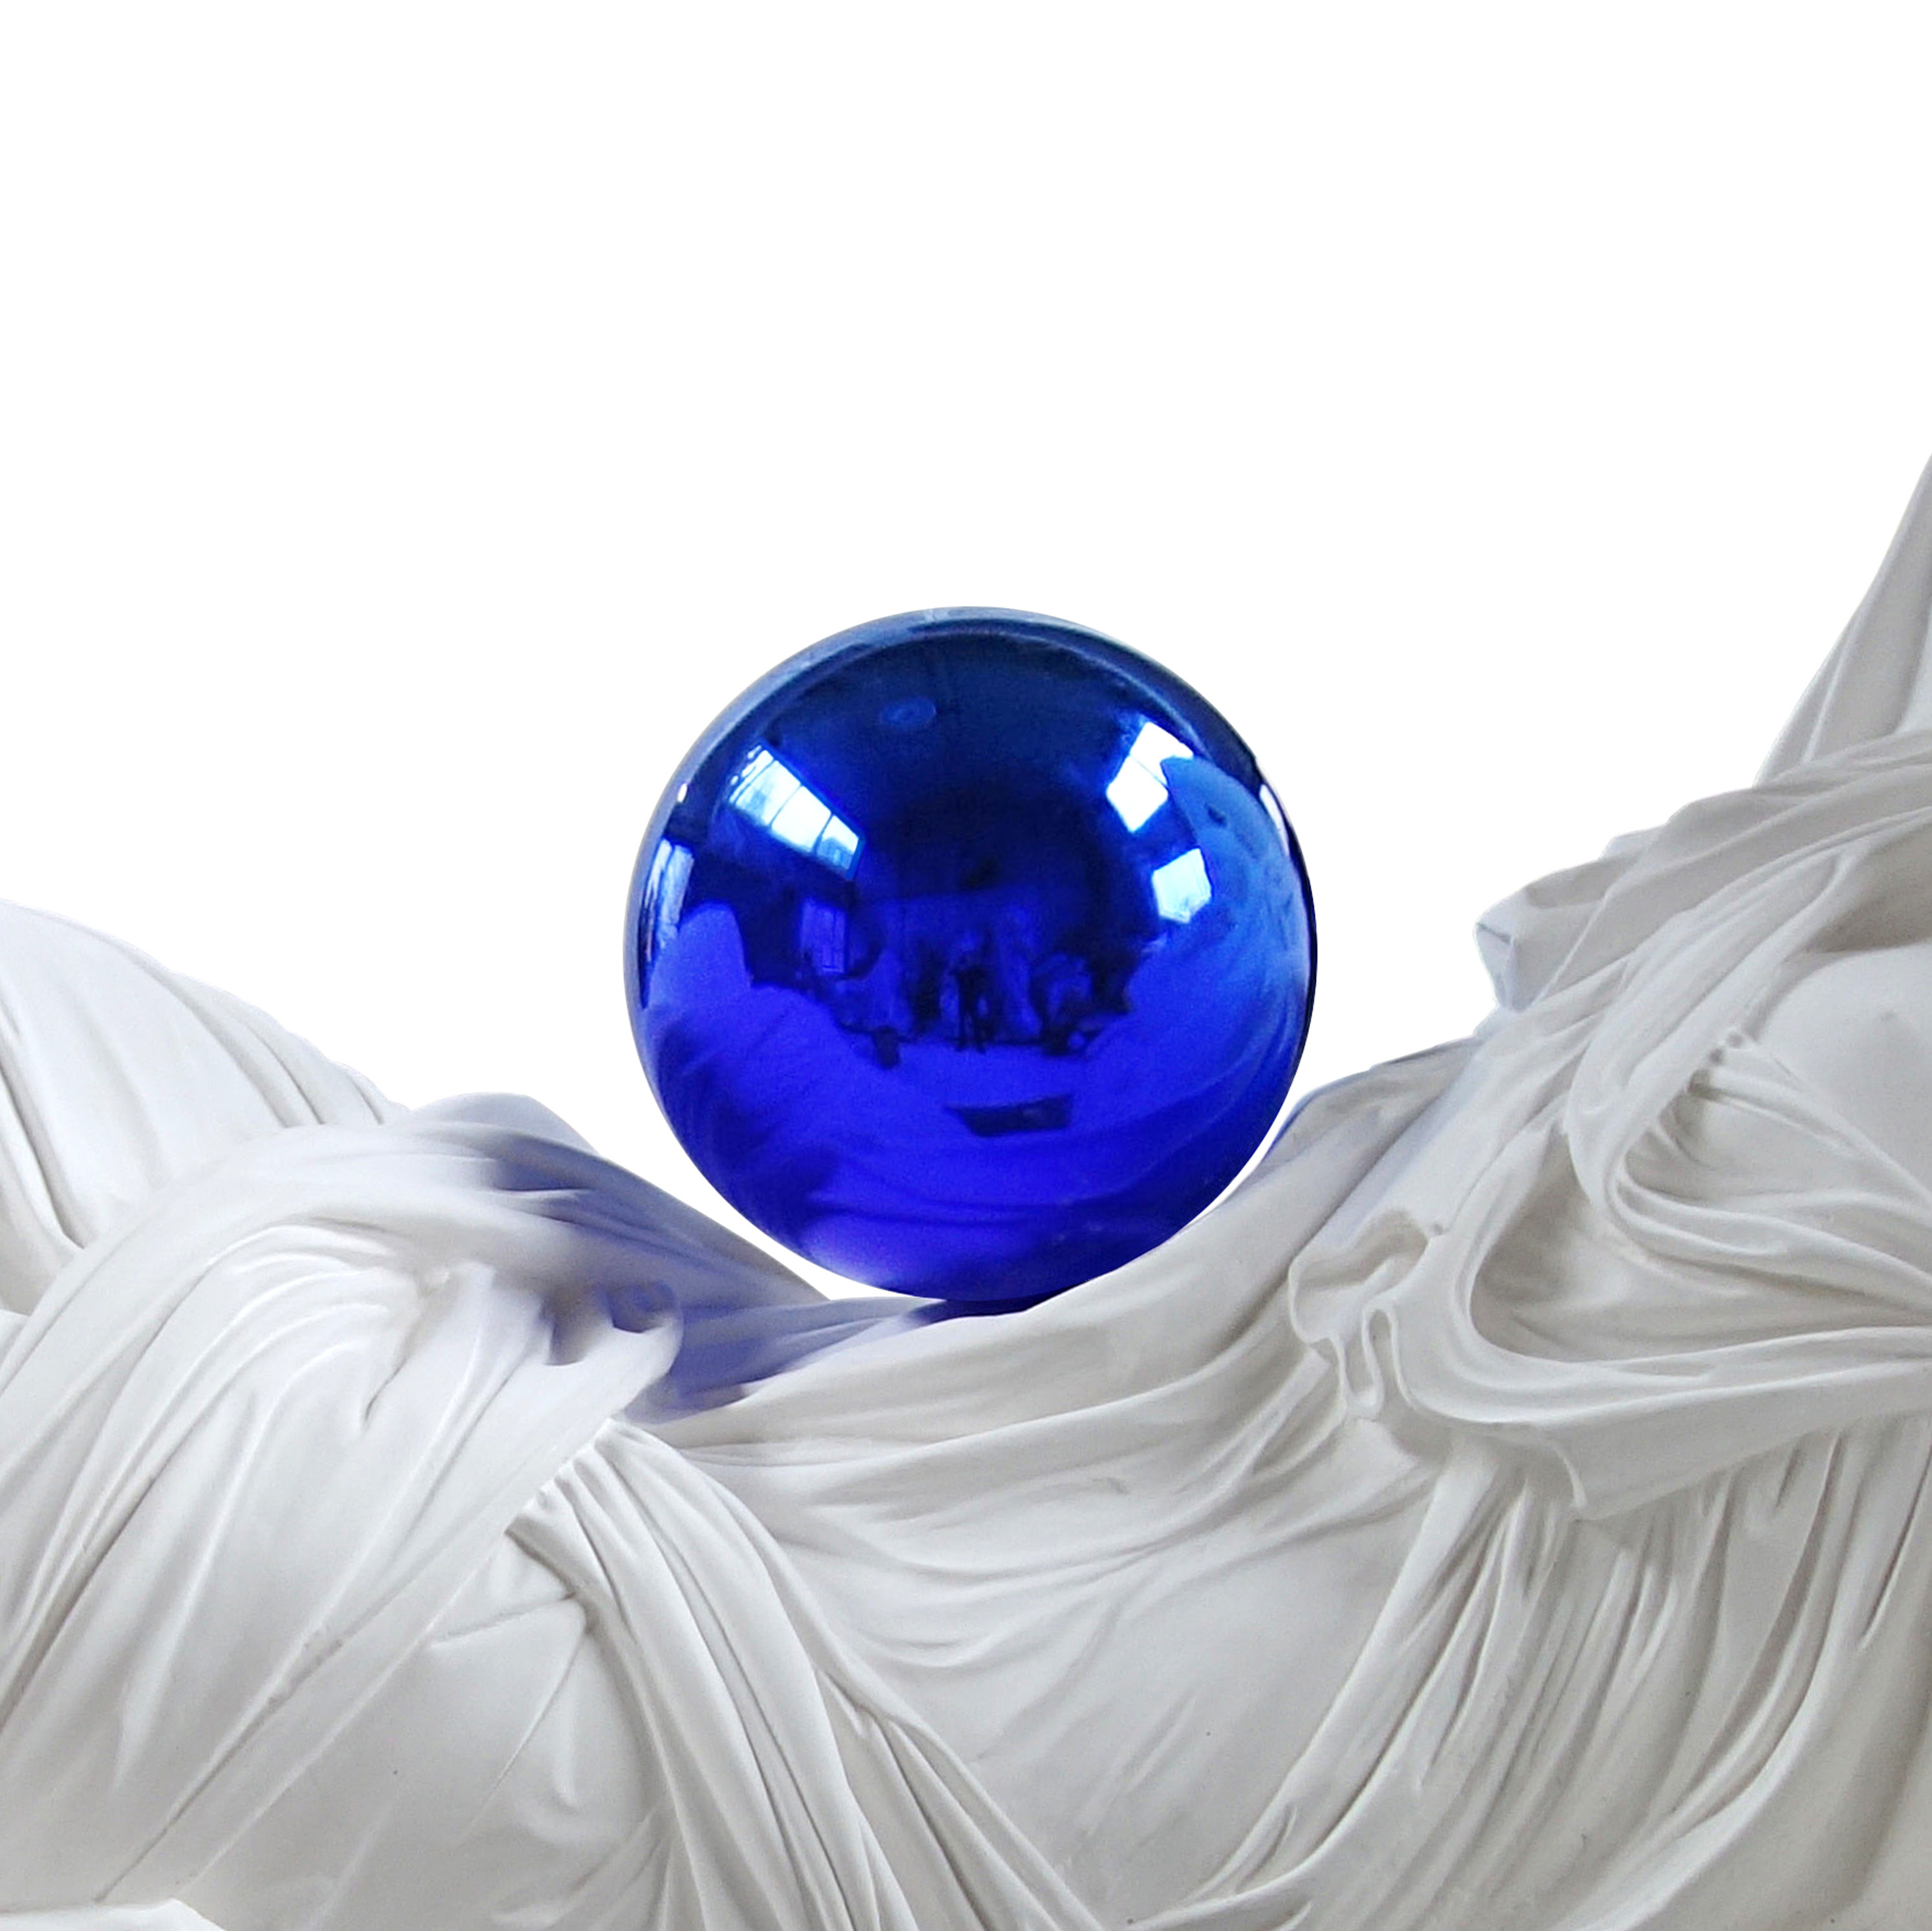 Gazing Ball (Ariadne), 2013 © Jeff Koons, David Zwirner